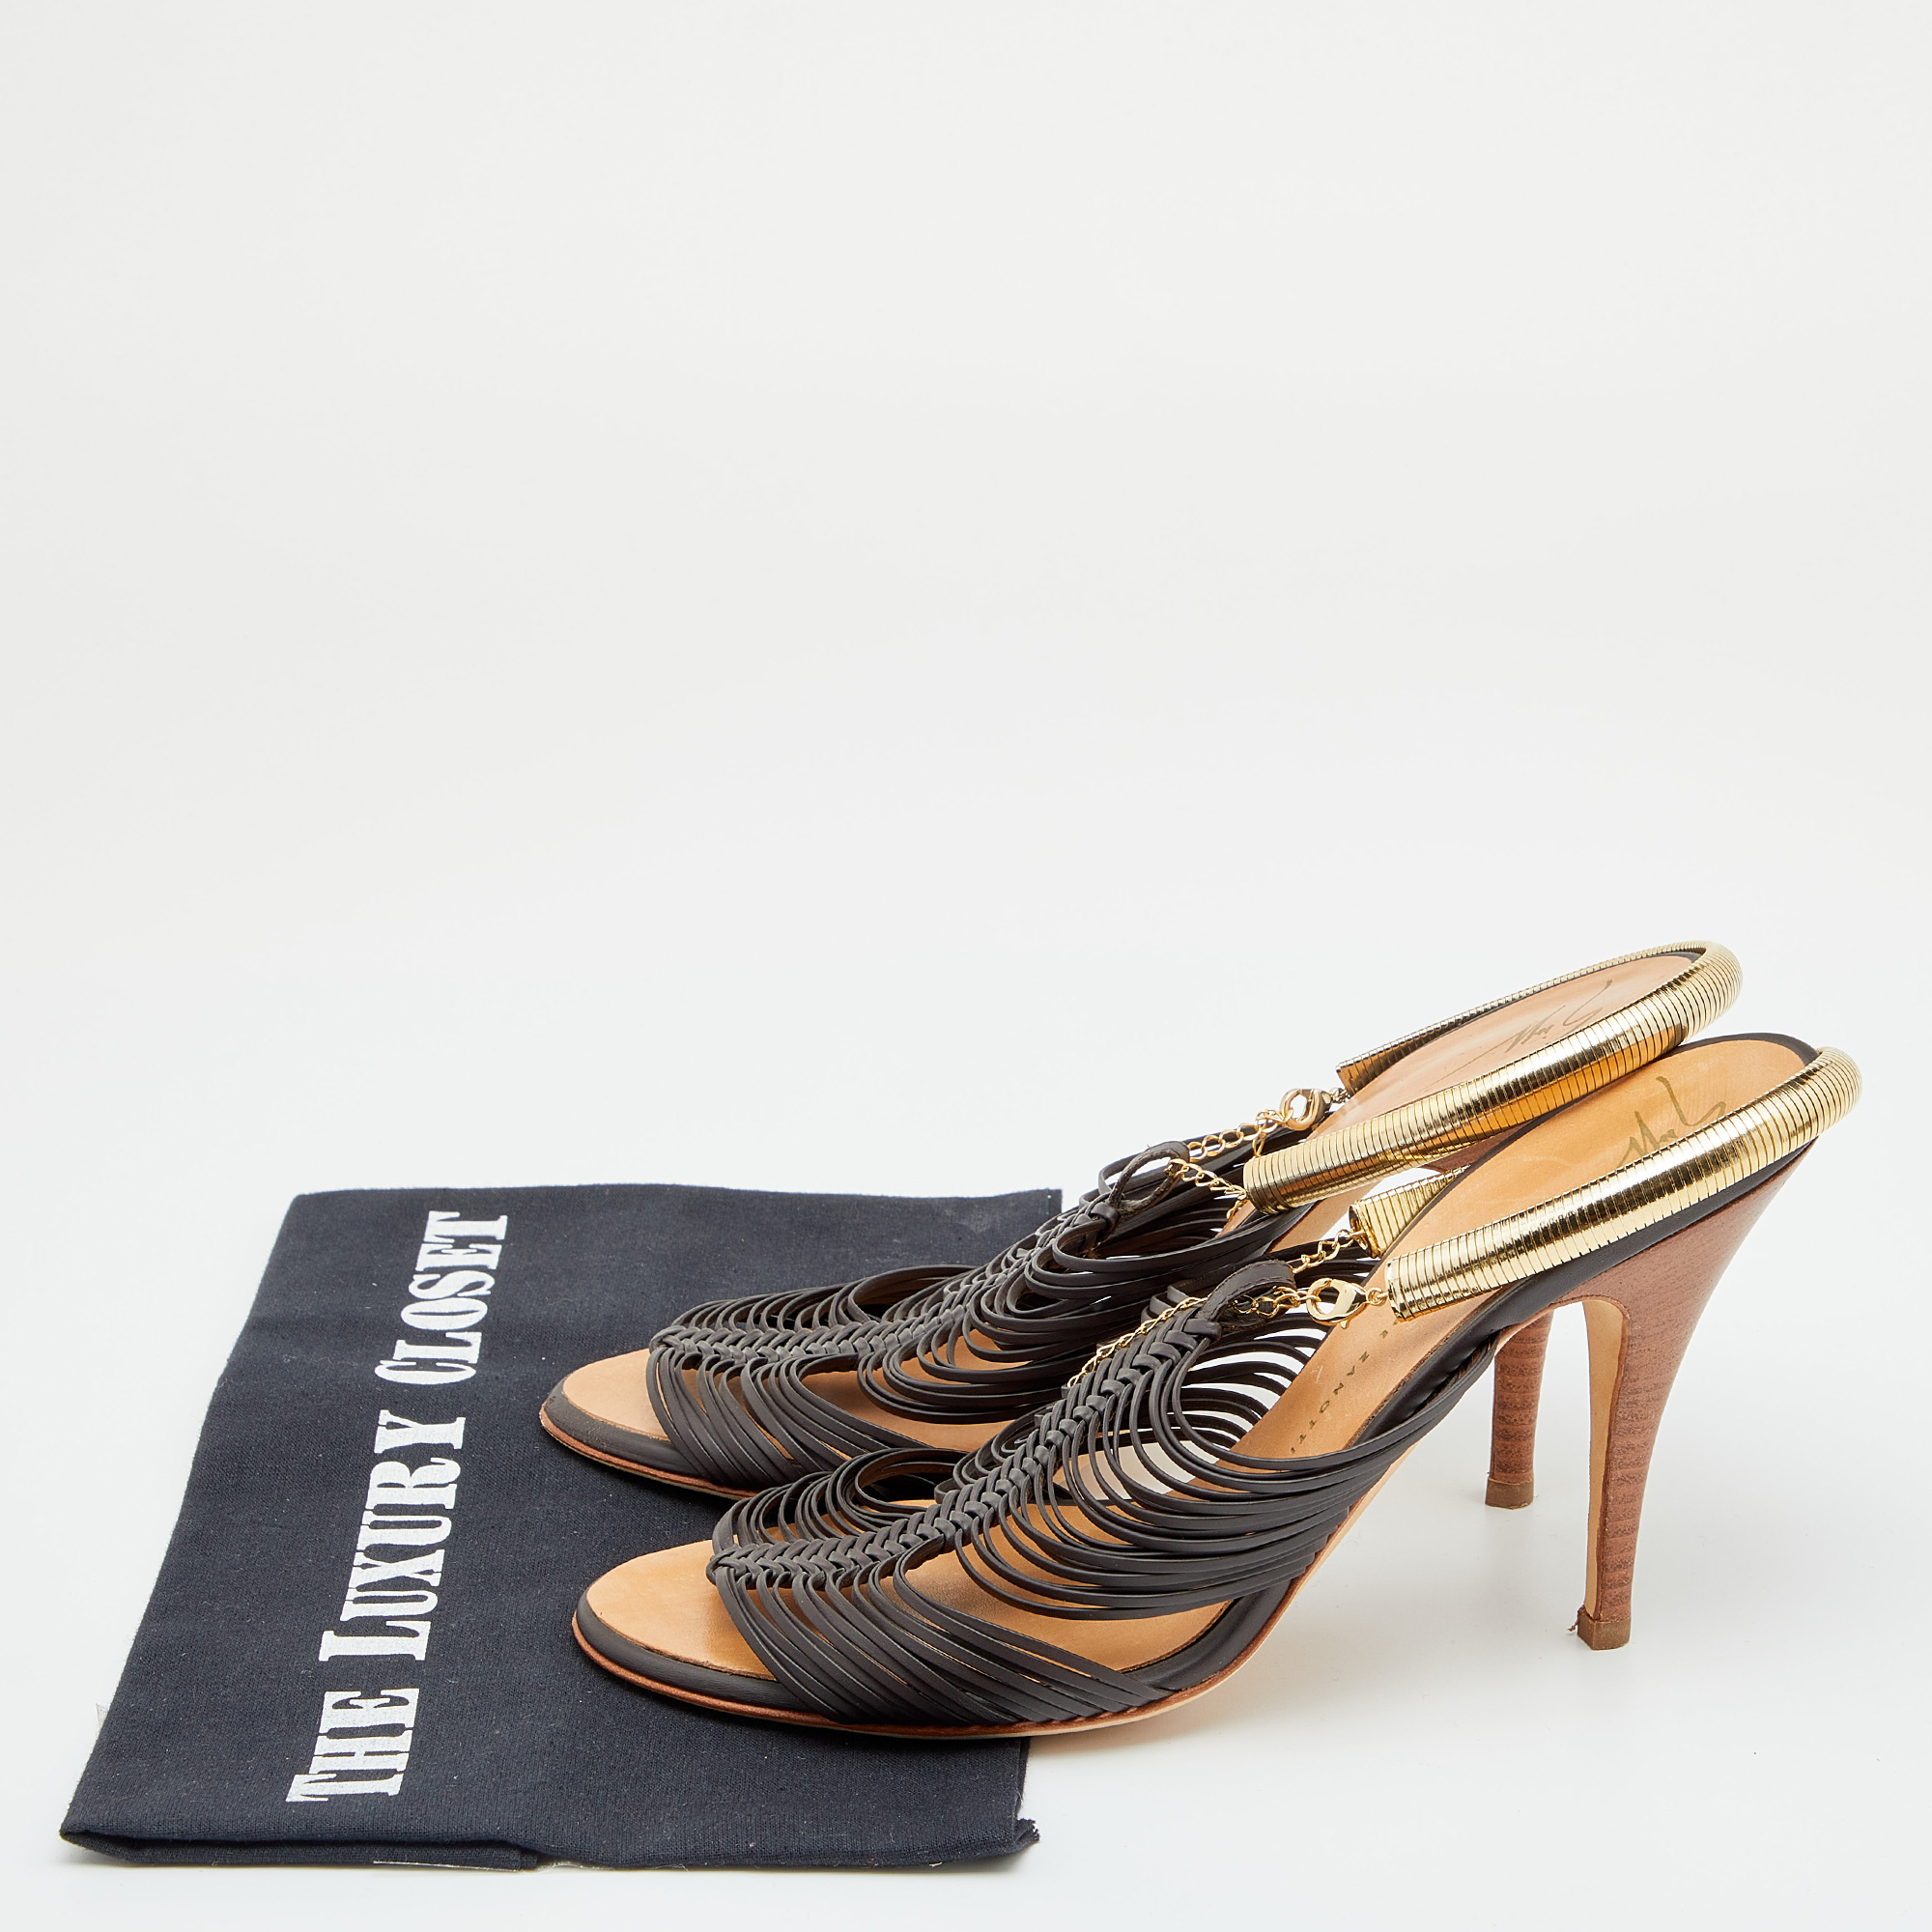 Giuseppe Zanotti Dark Brown Strappy Leather Sandals Size 38